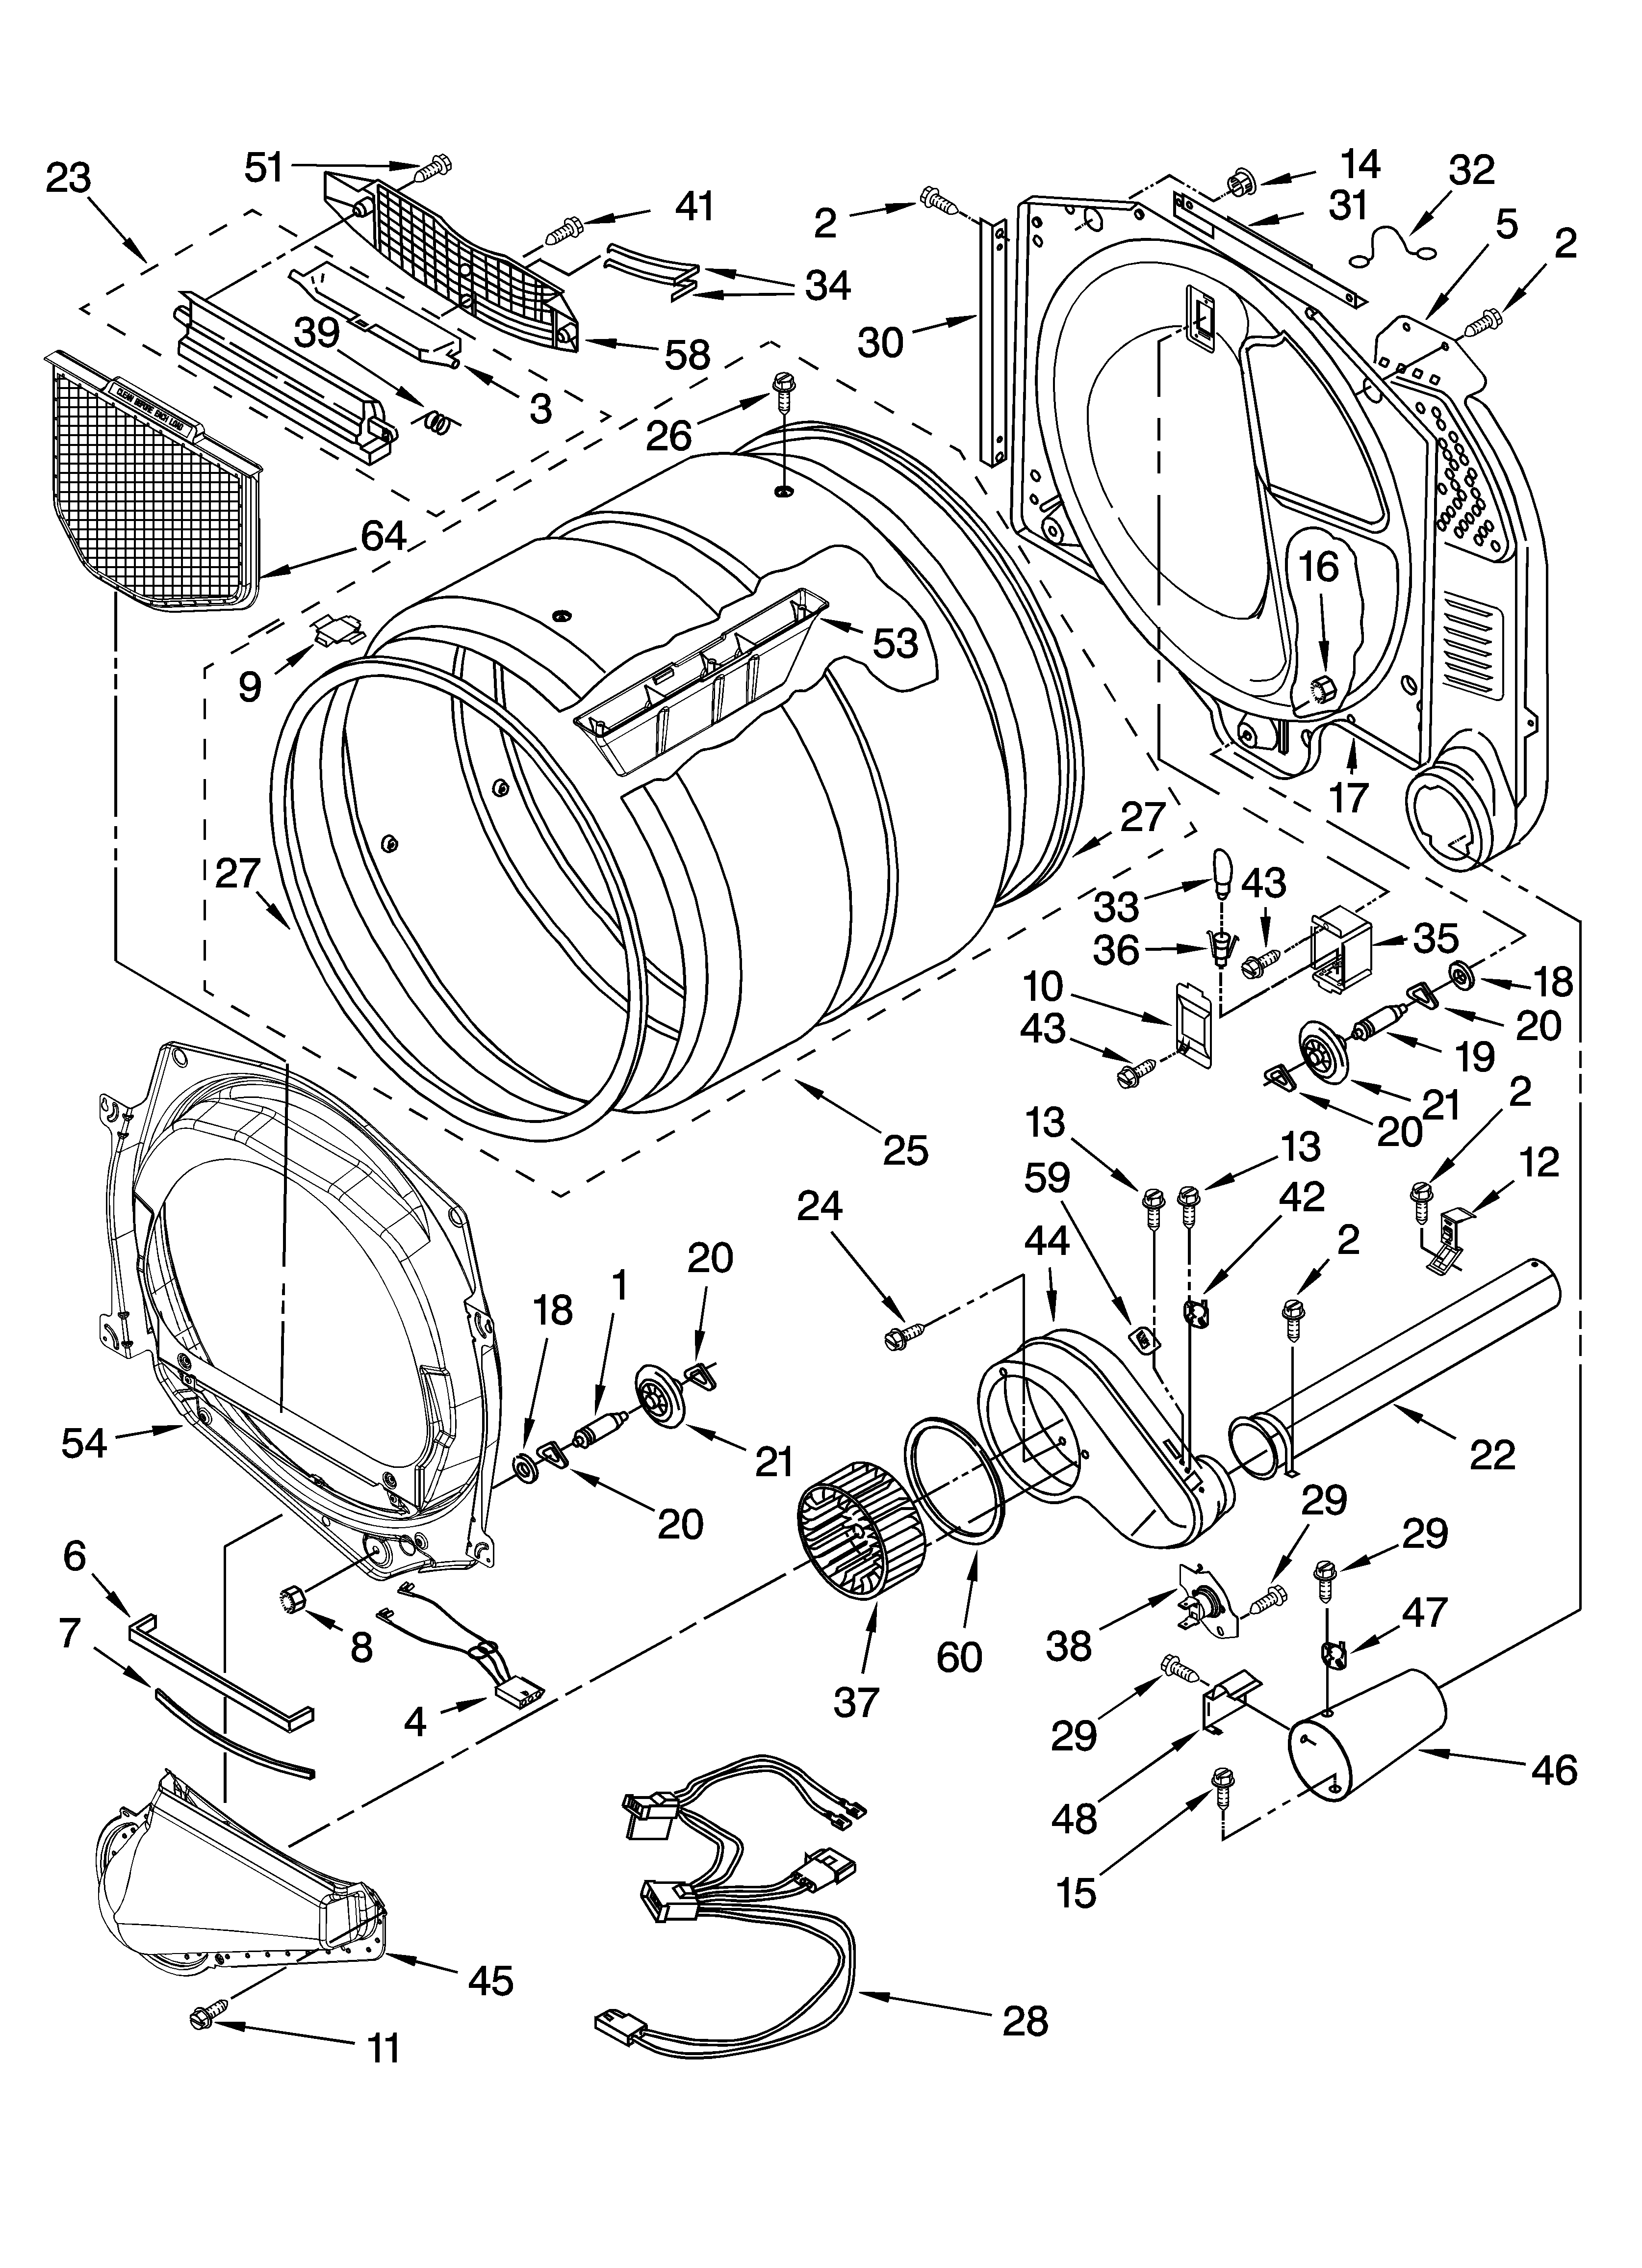 29 Kenmore He2 Plus Parts Diagram Wiring Diagram List